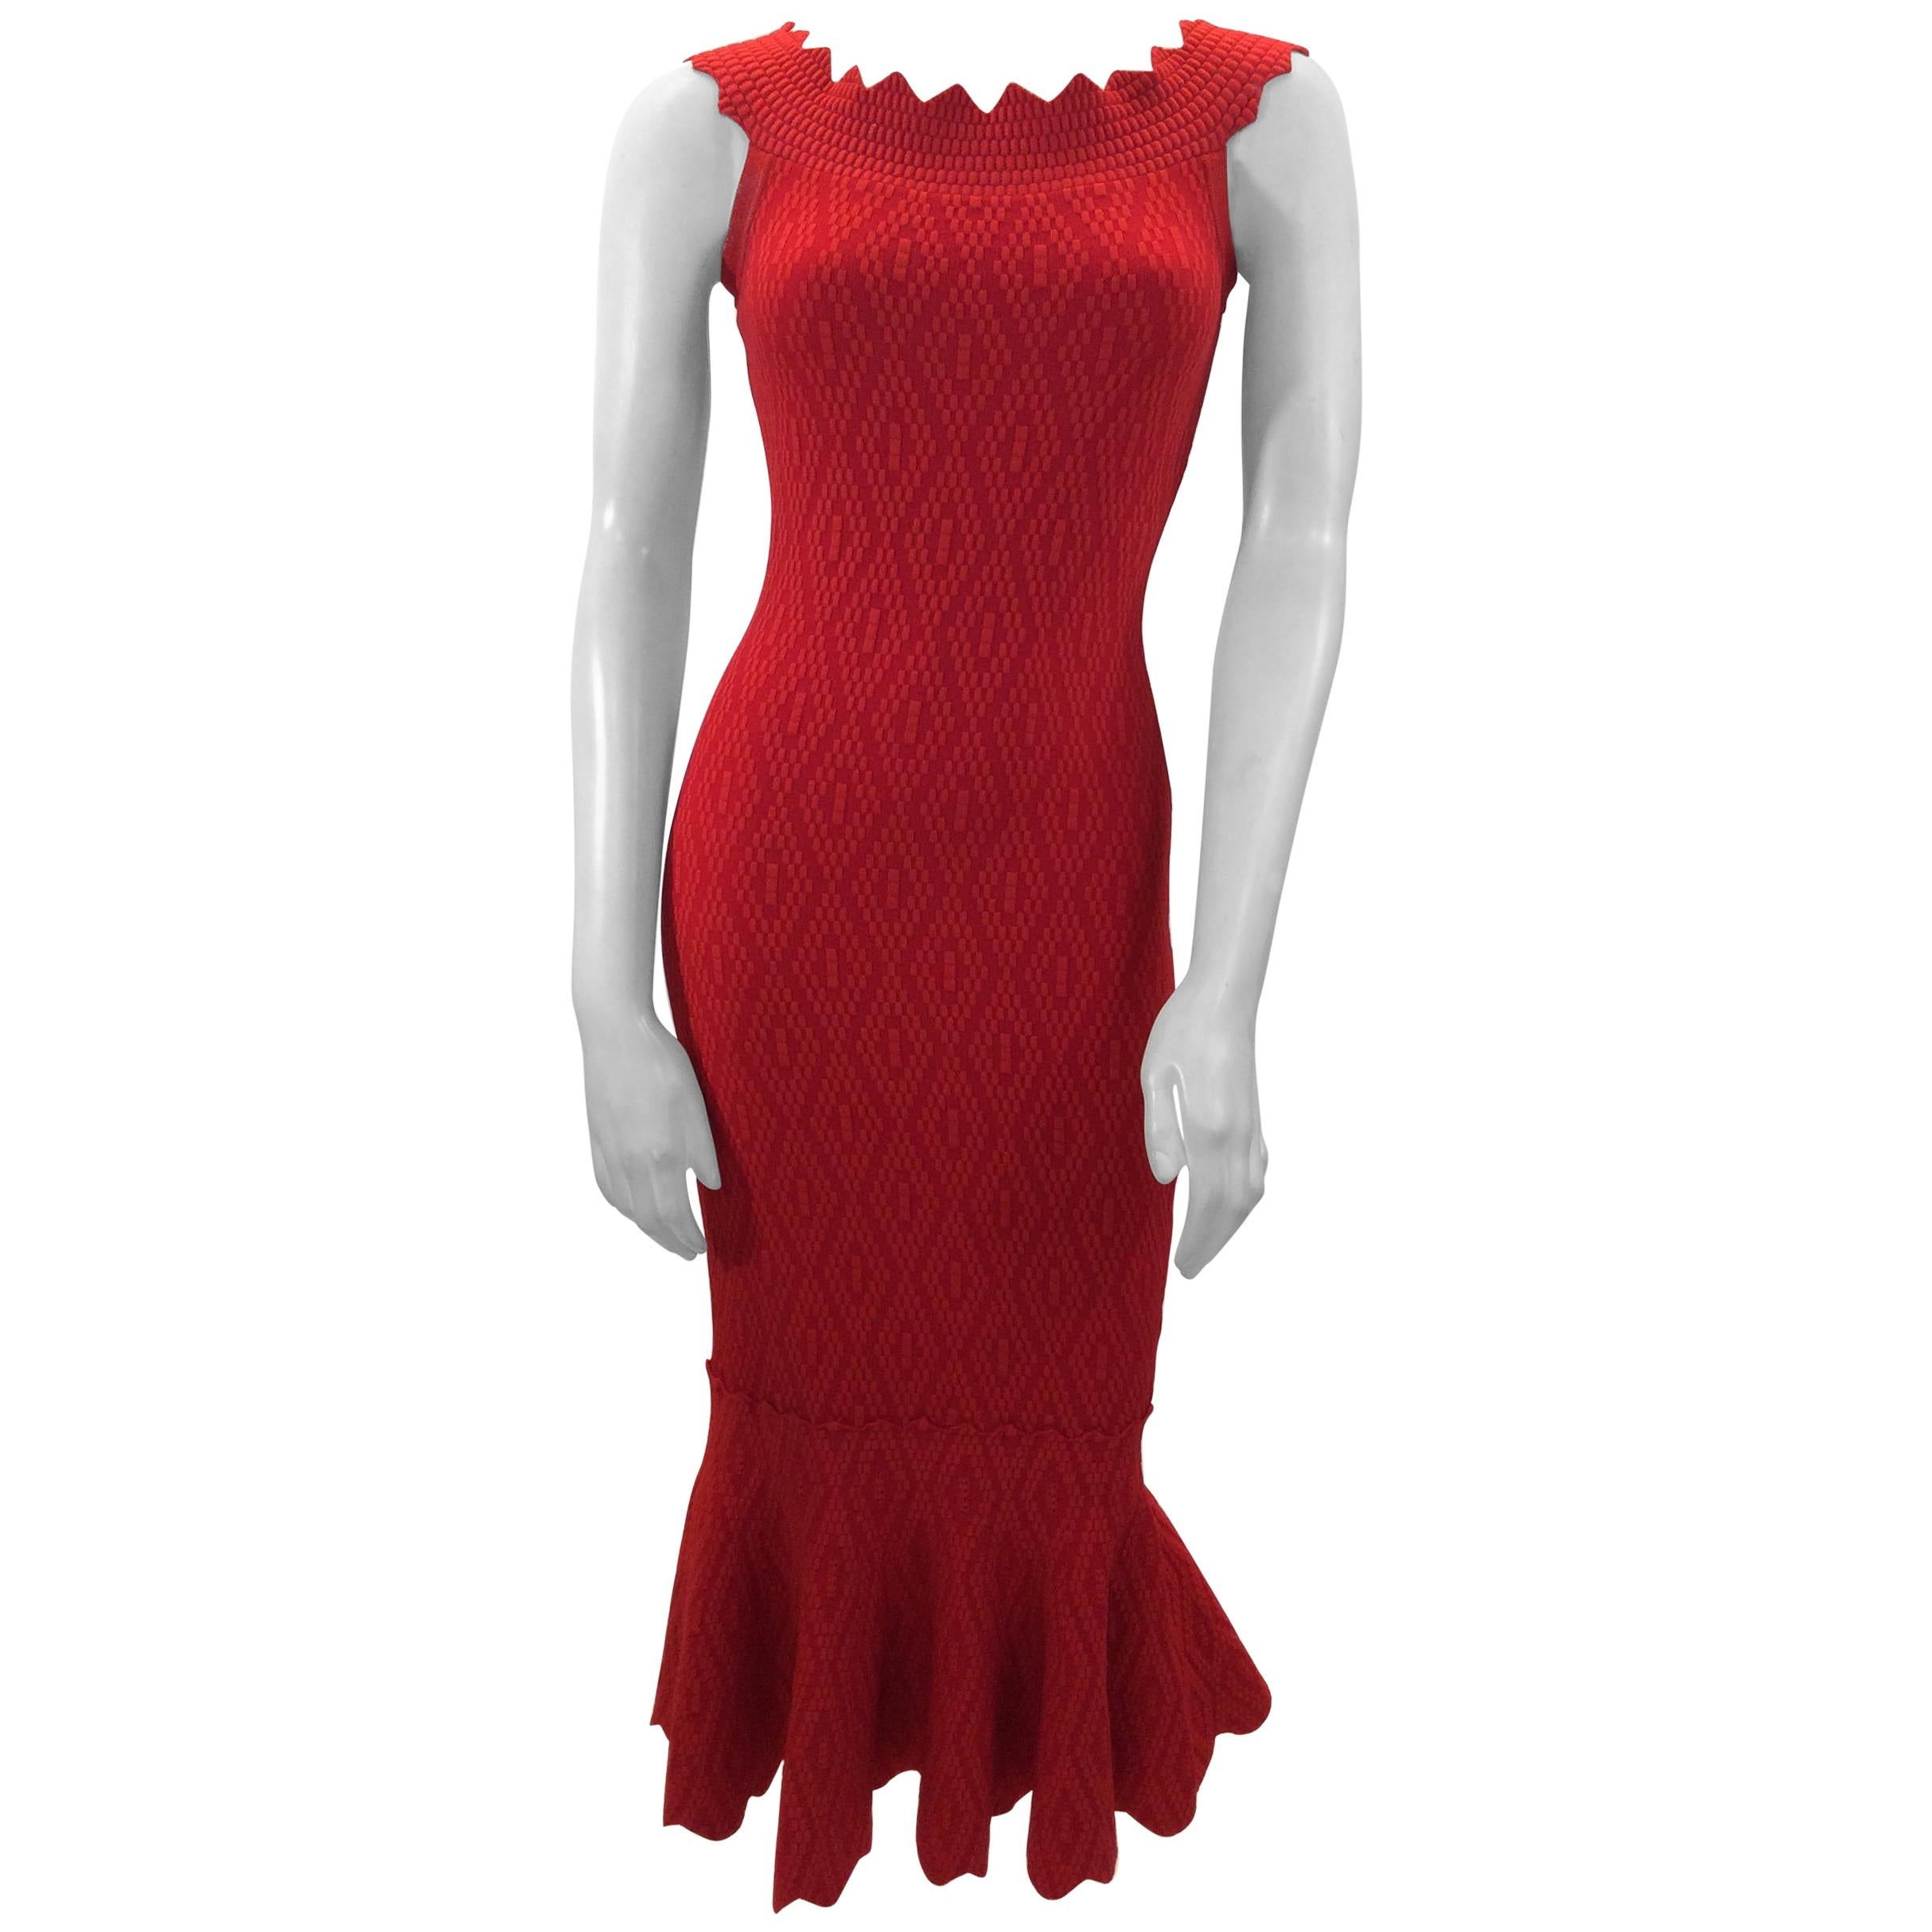 Jonathan Simkhai Red Knit Dress For Sale